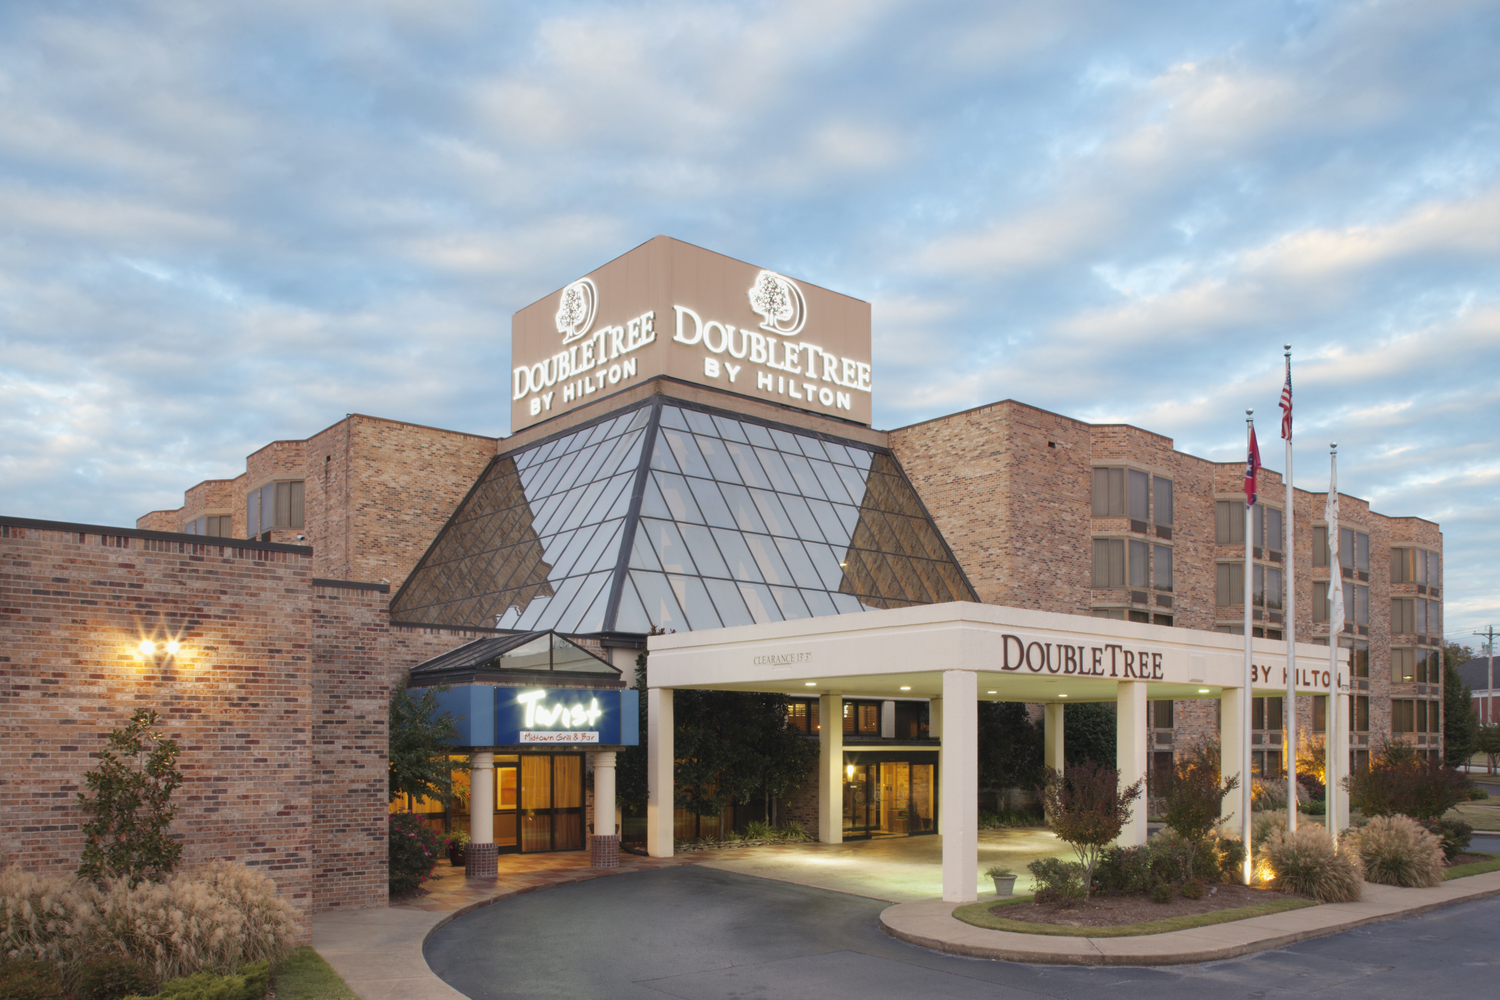 DoubleTree by Hilton Hotel Jackson, Jackson, TN Jobs | Hospitality Online